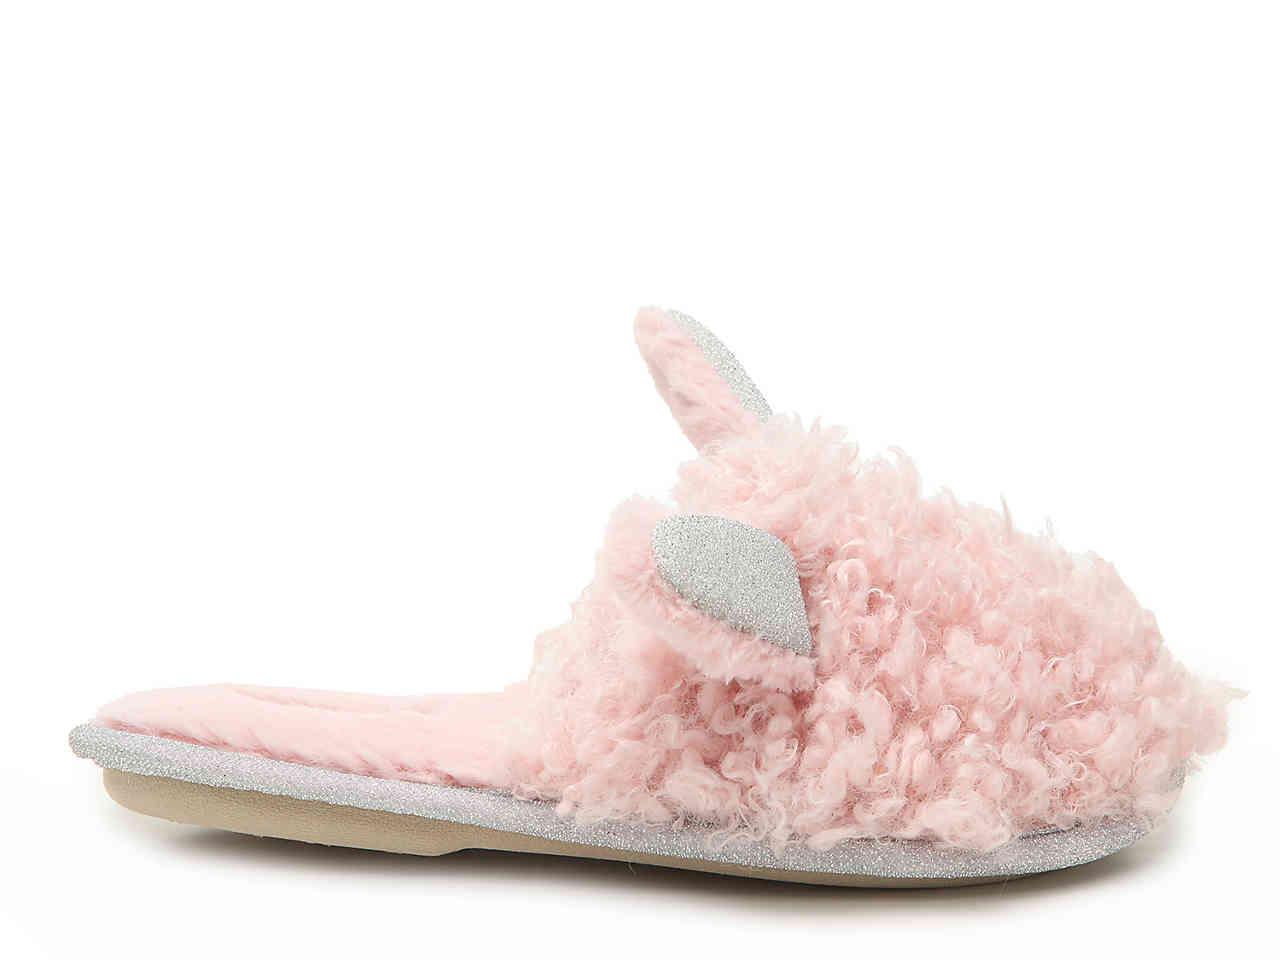 Open Toe Slippers for Women, Womens Cute Bunny Slippers